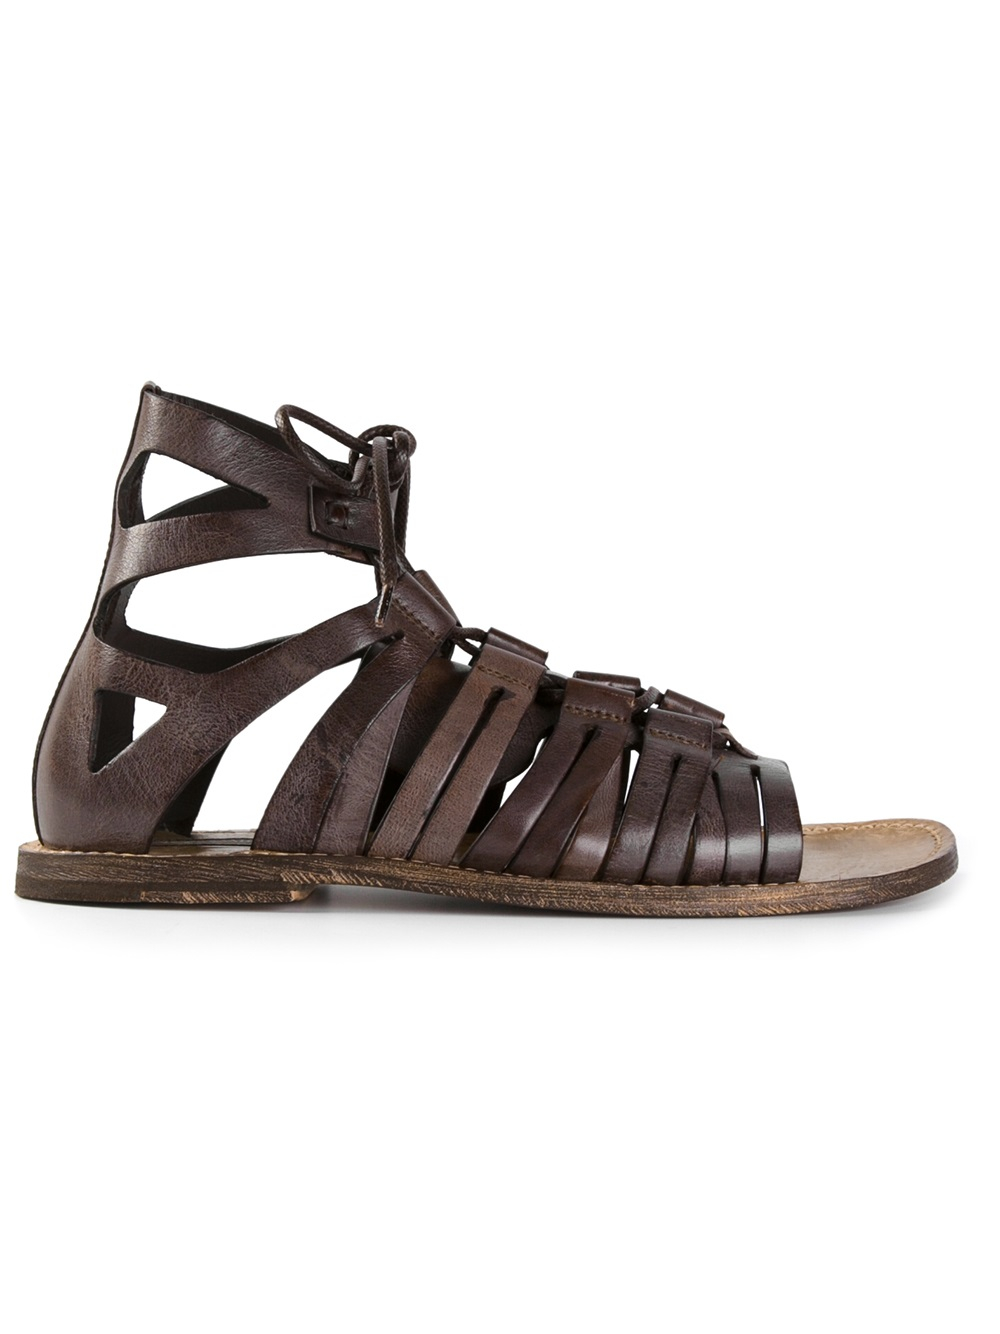 slave sandals dolce and gabbana